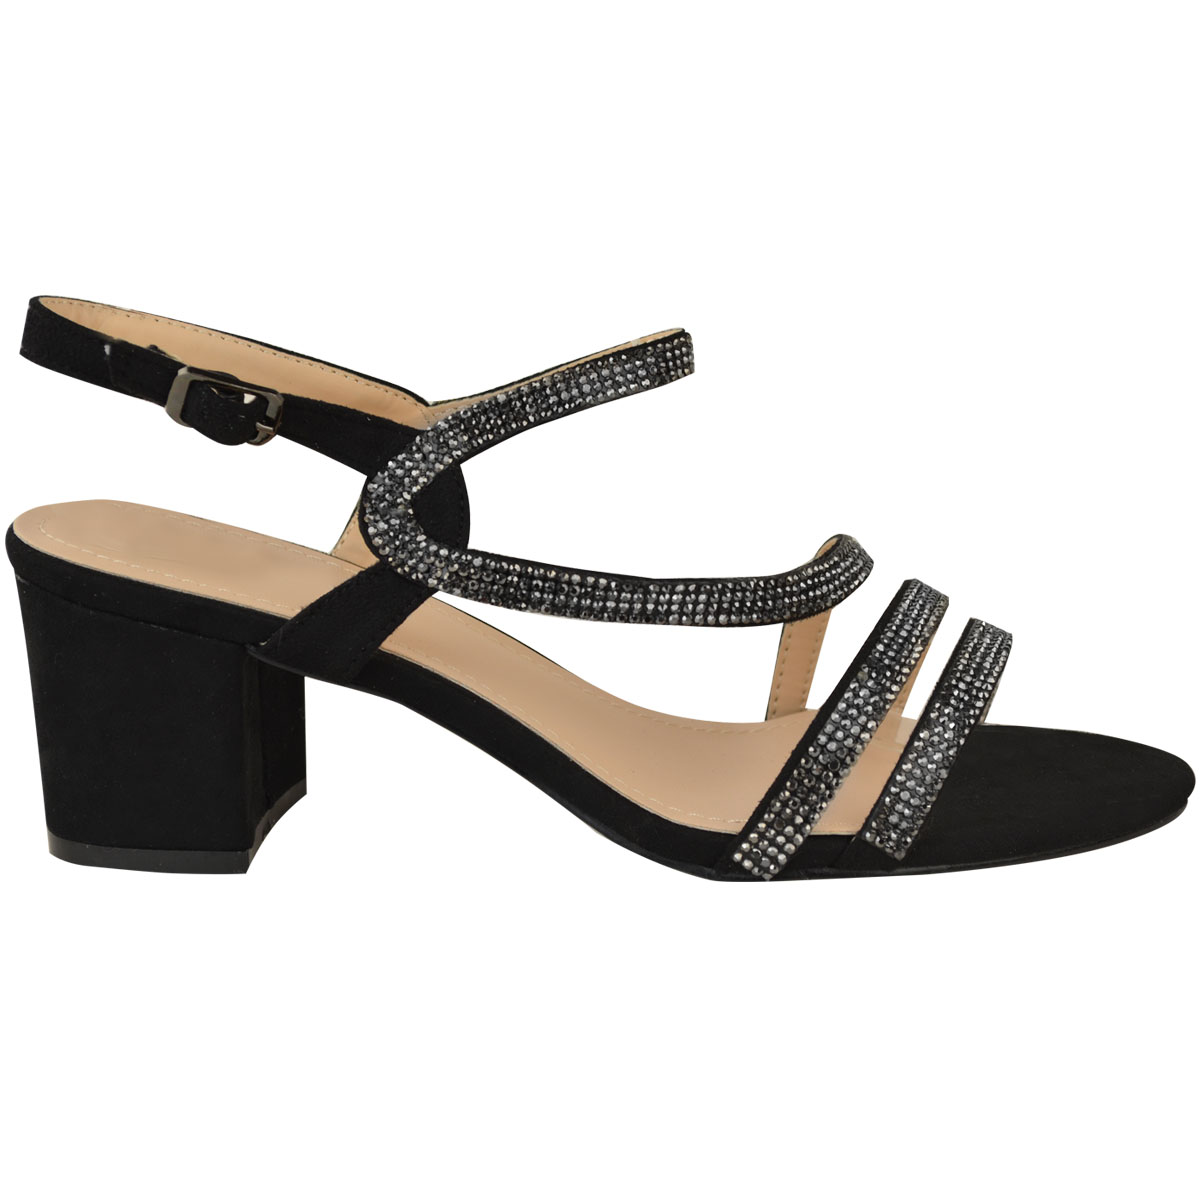 Ladies black low heel sandals